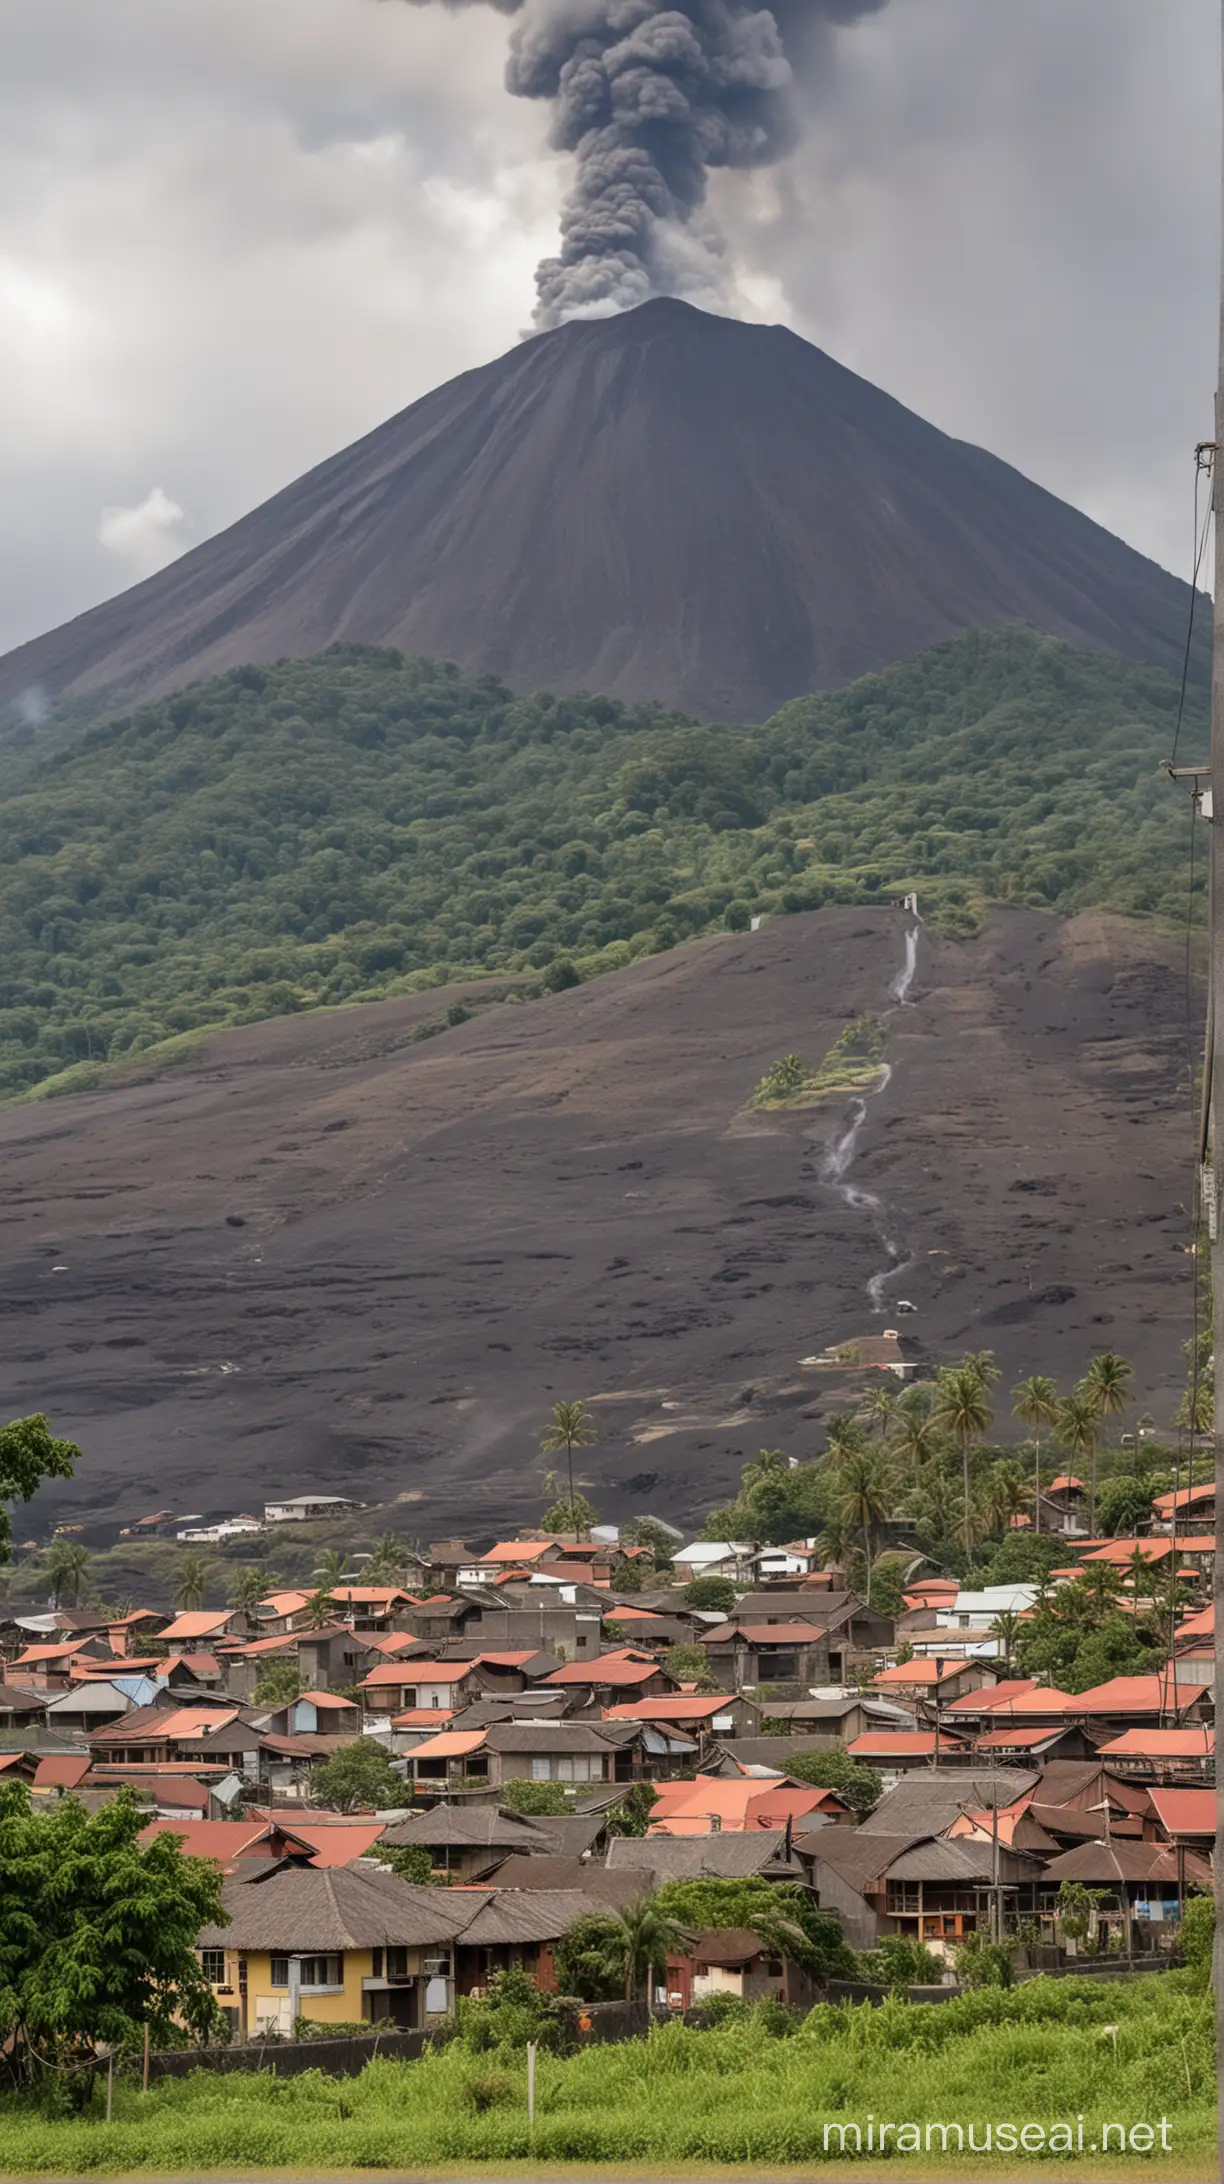 Vibrant Village Life Near an Active Volcano